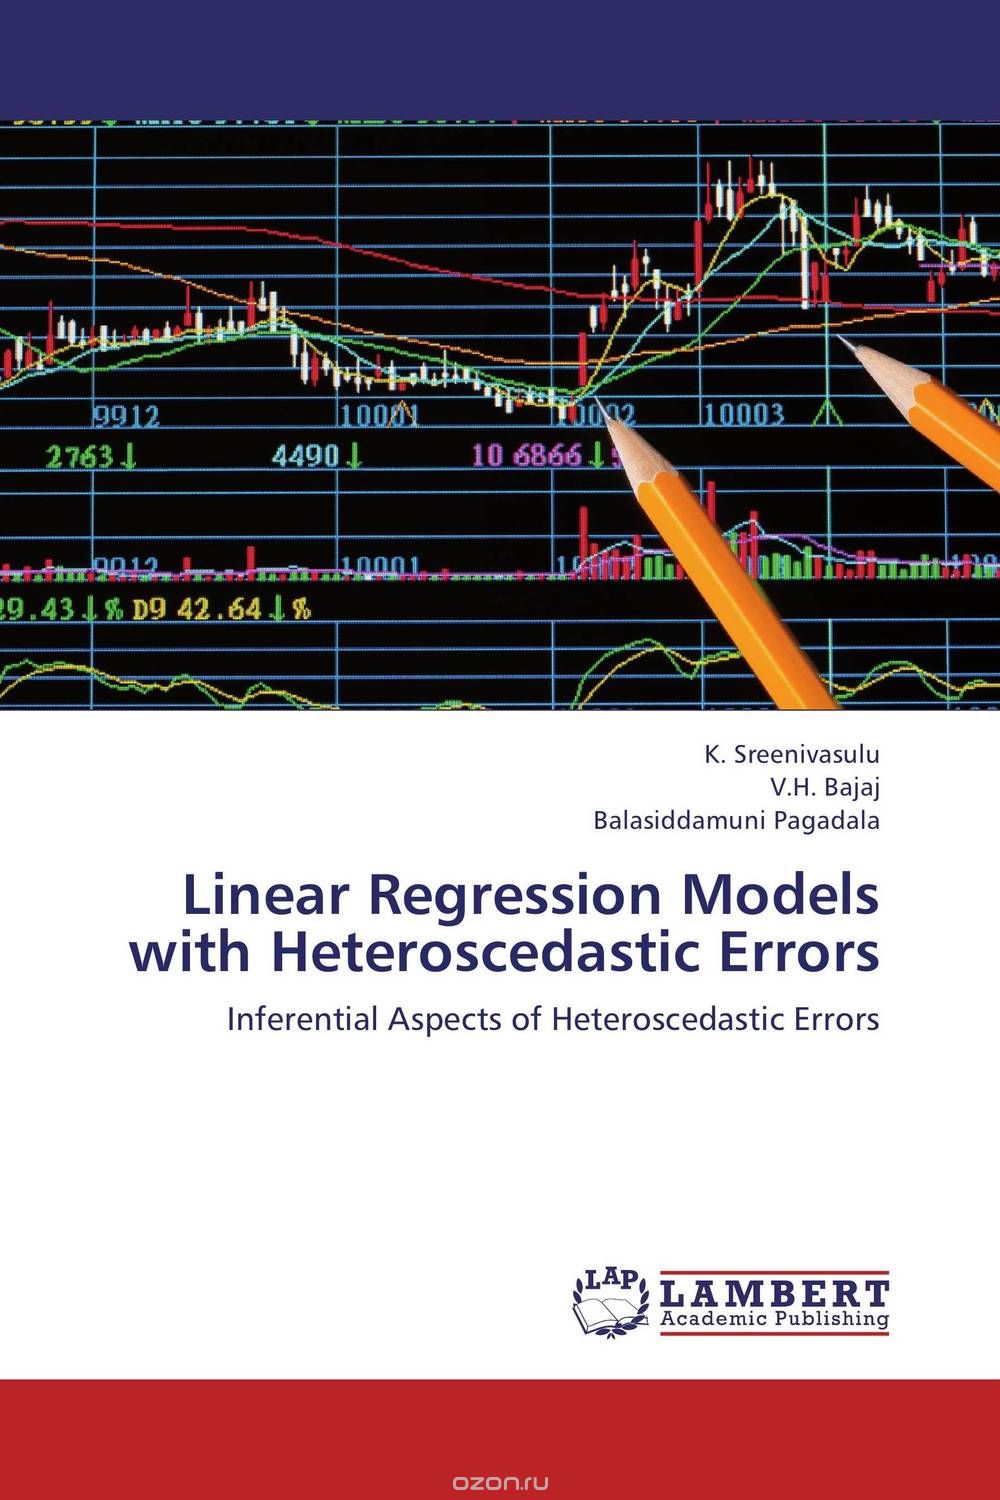 Linear Regression Models with Heteroscedastic Errors